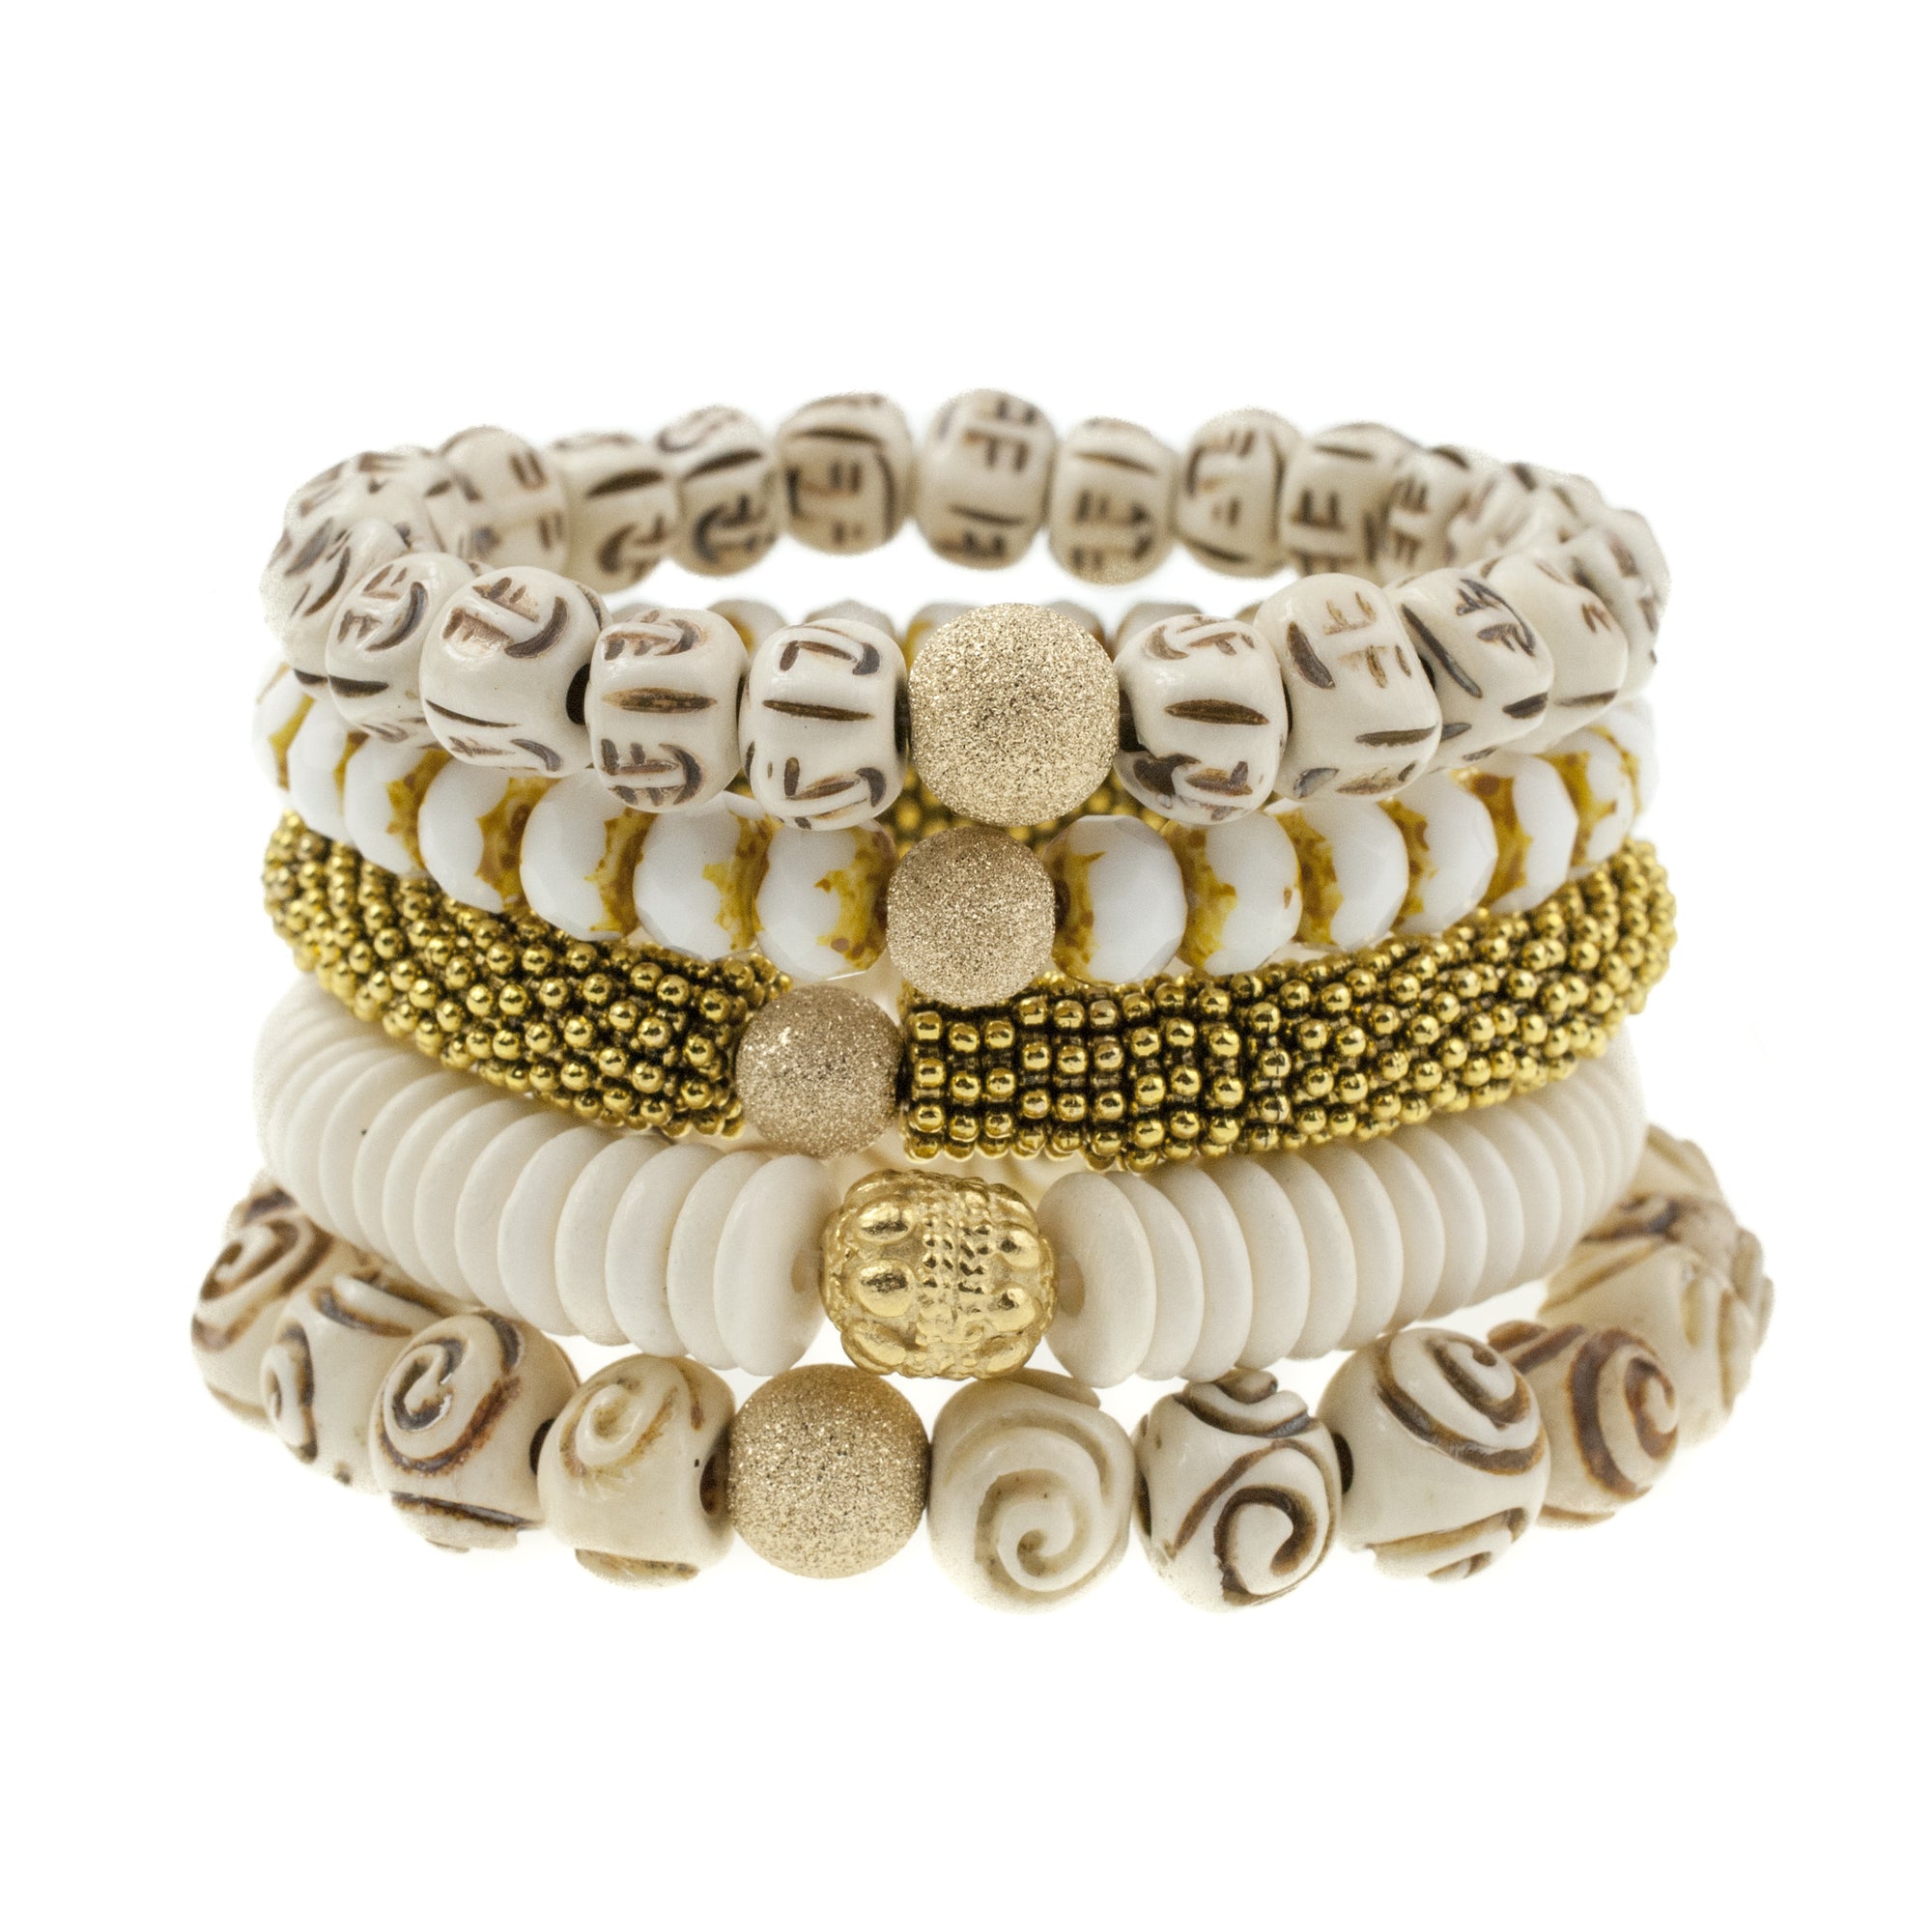 Gemstone beaded bracelet stack neutral colors